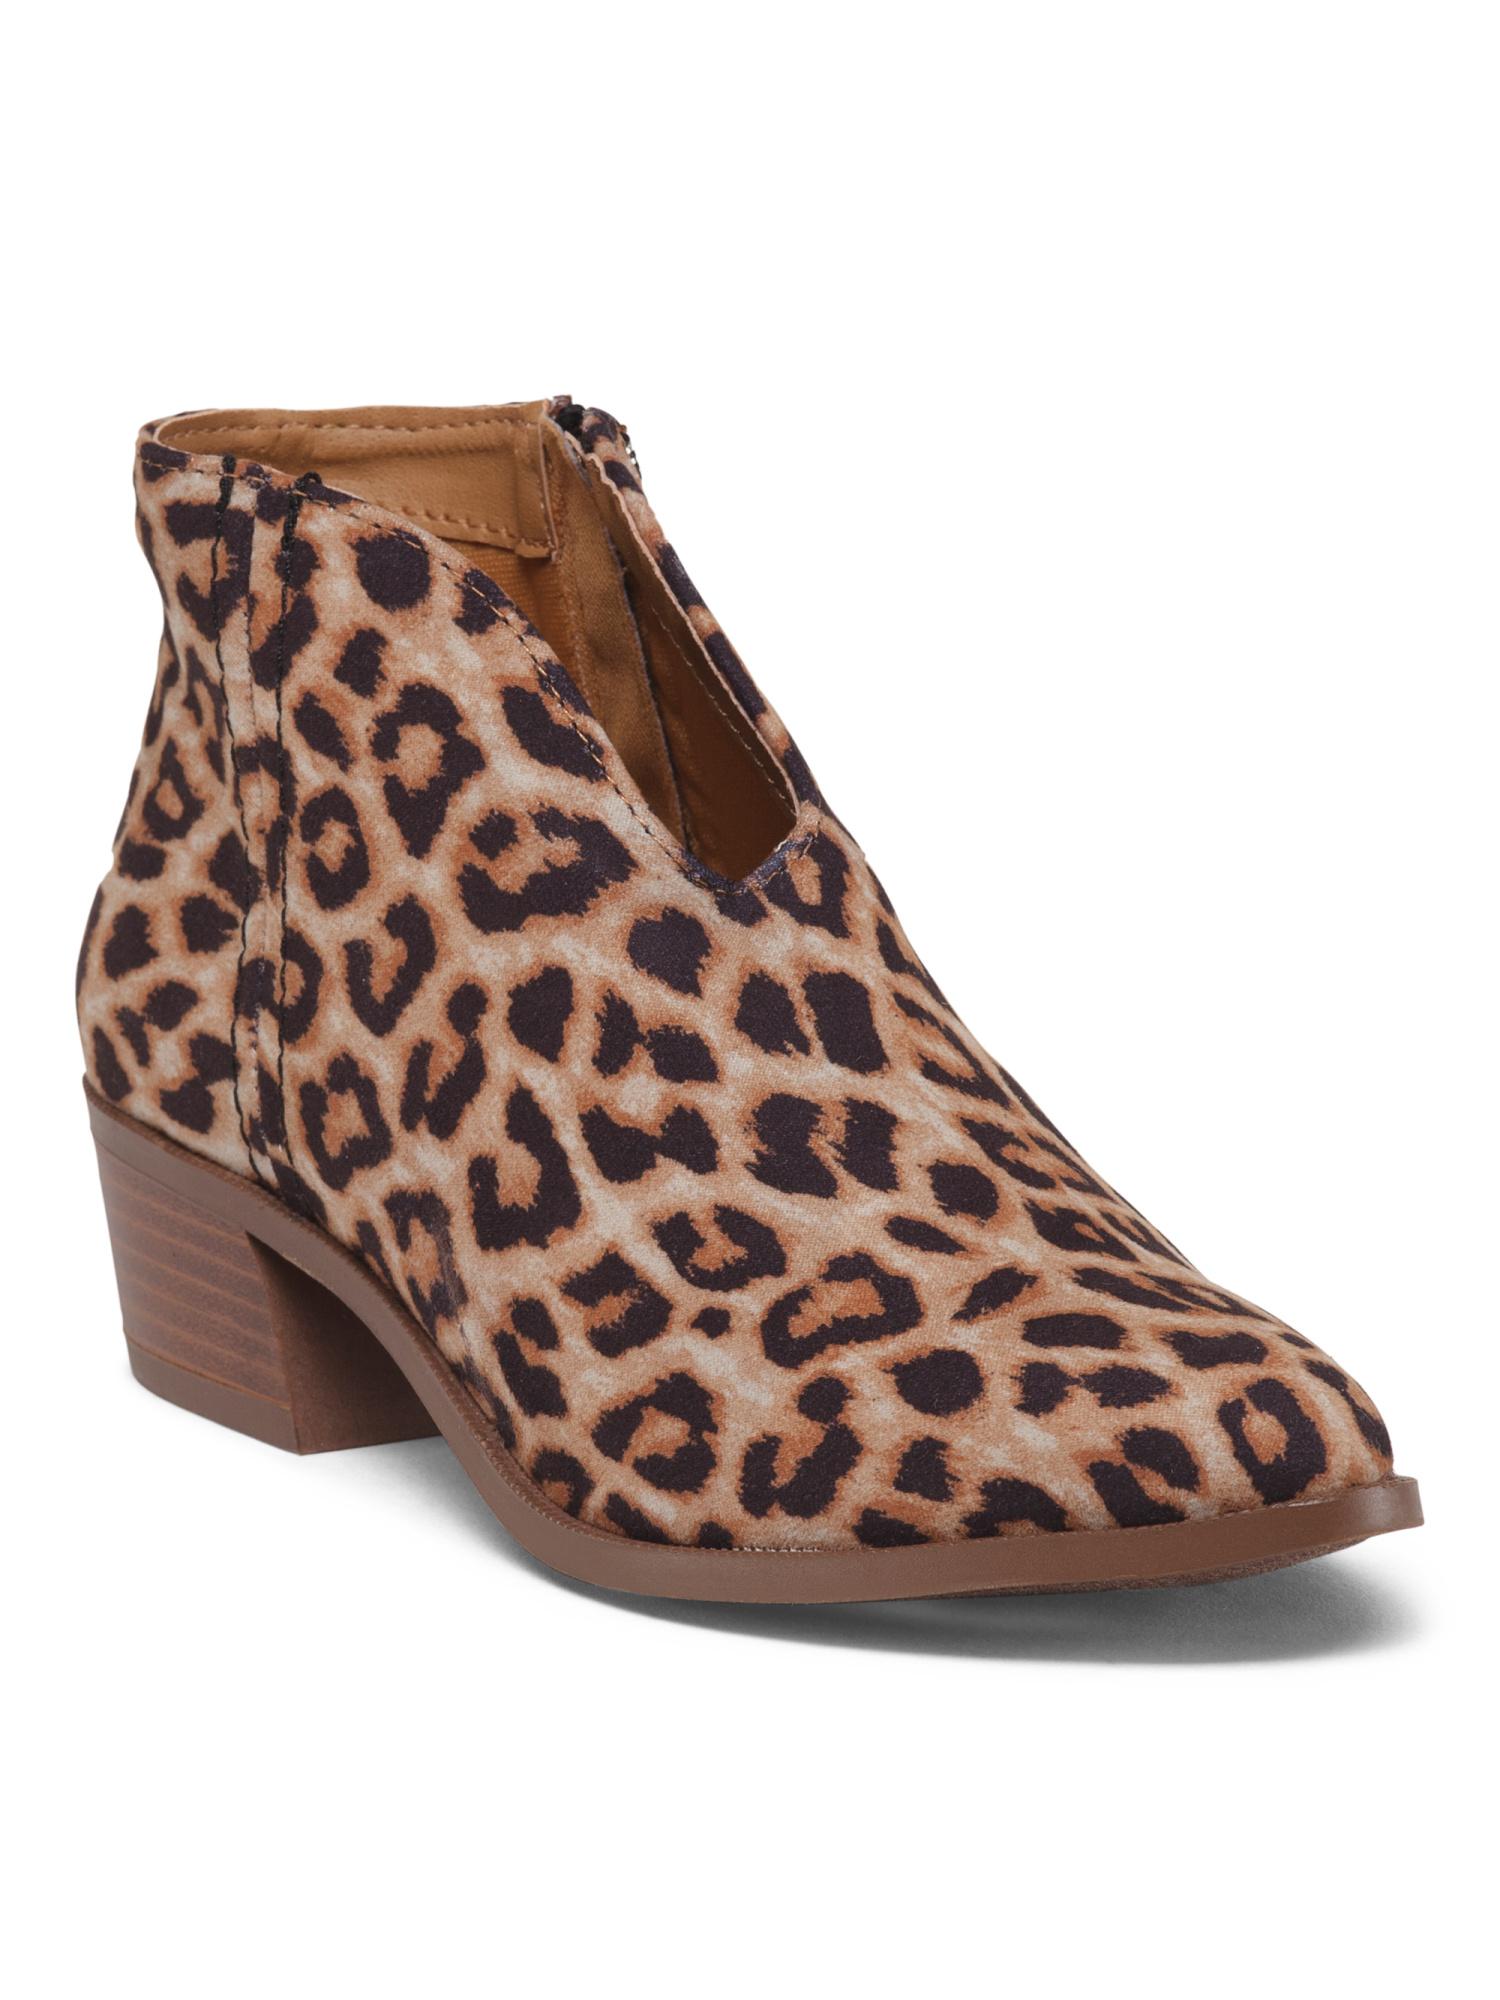 tj maxx leopard shoes